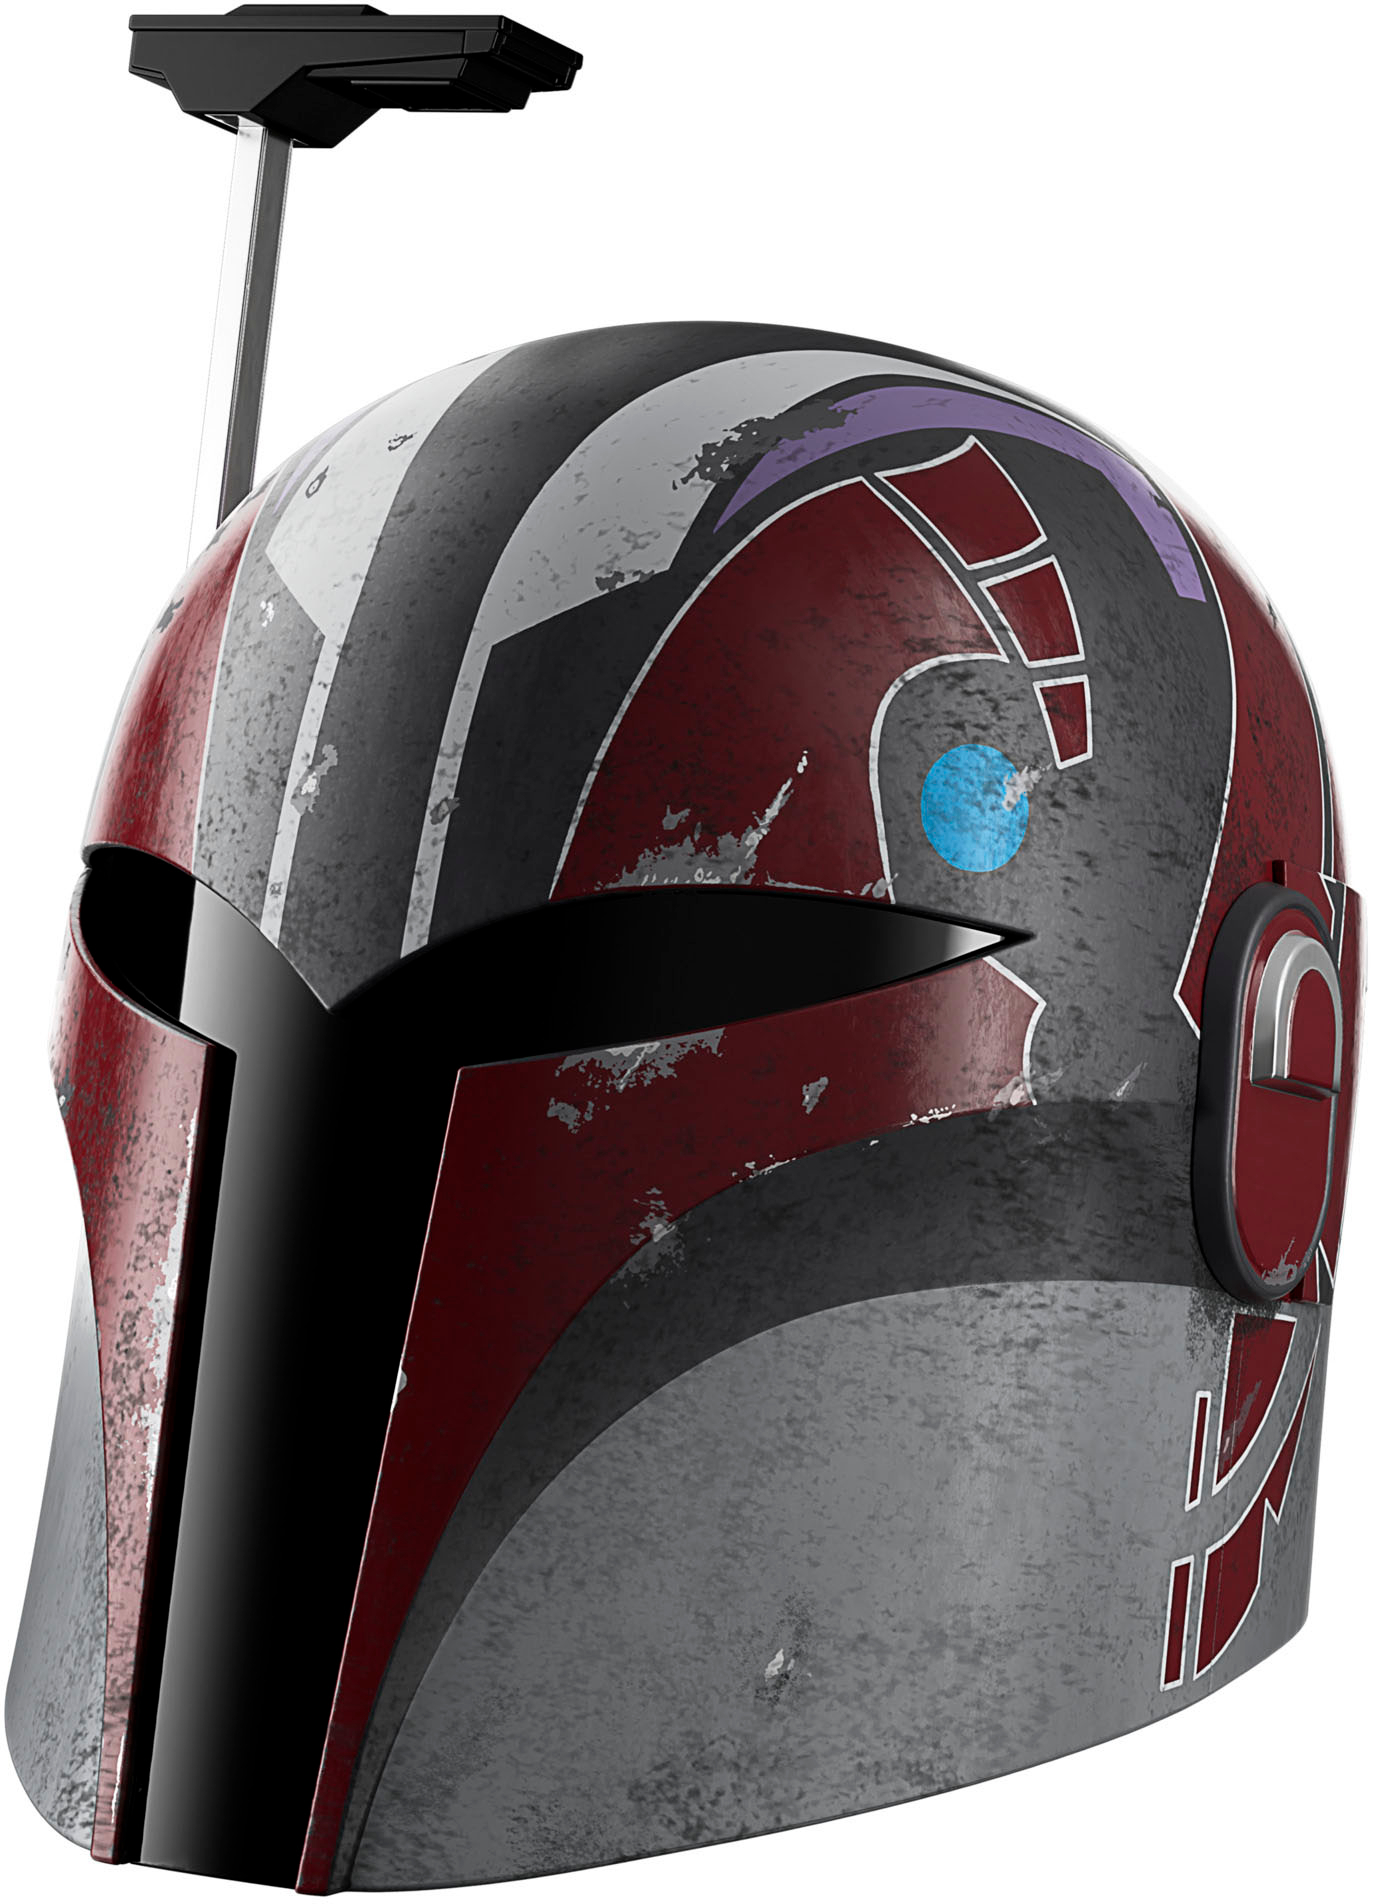 Angle View: Star Wars - The Black Series Sabine Wren Electronic Helmet